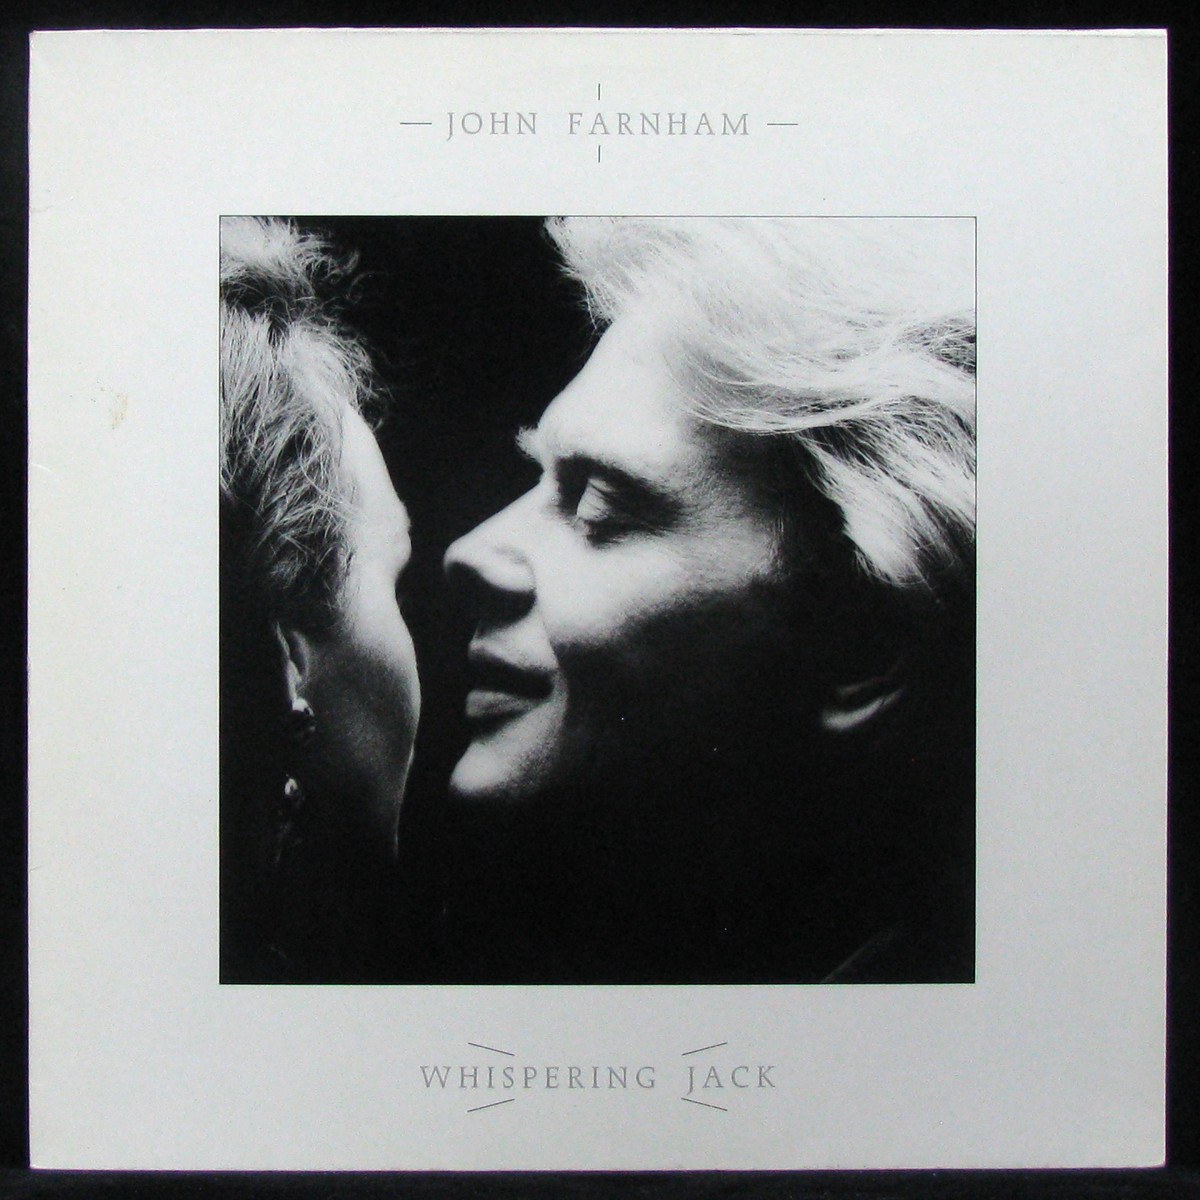 LP John Farnham — Whispering Jack (club edition) фото